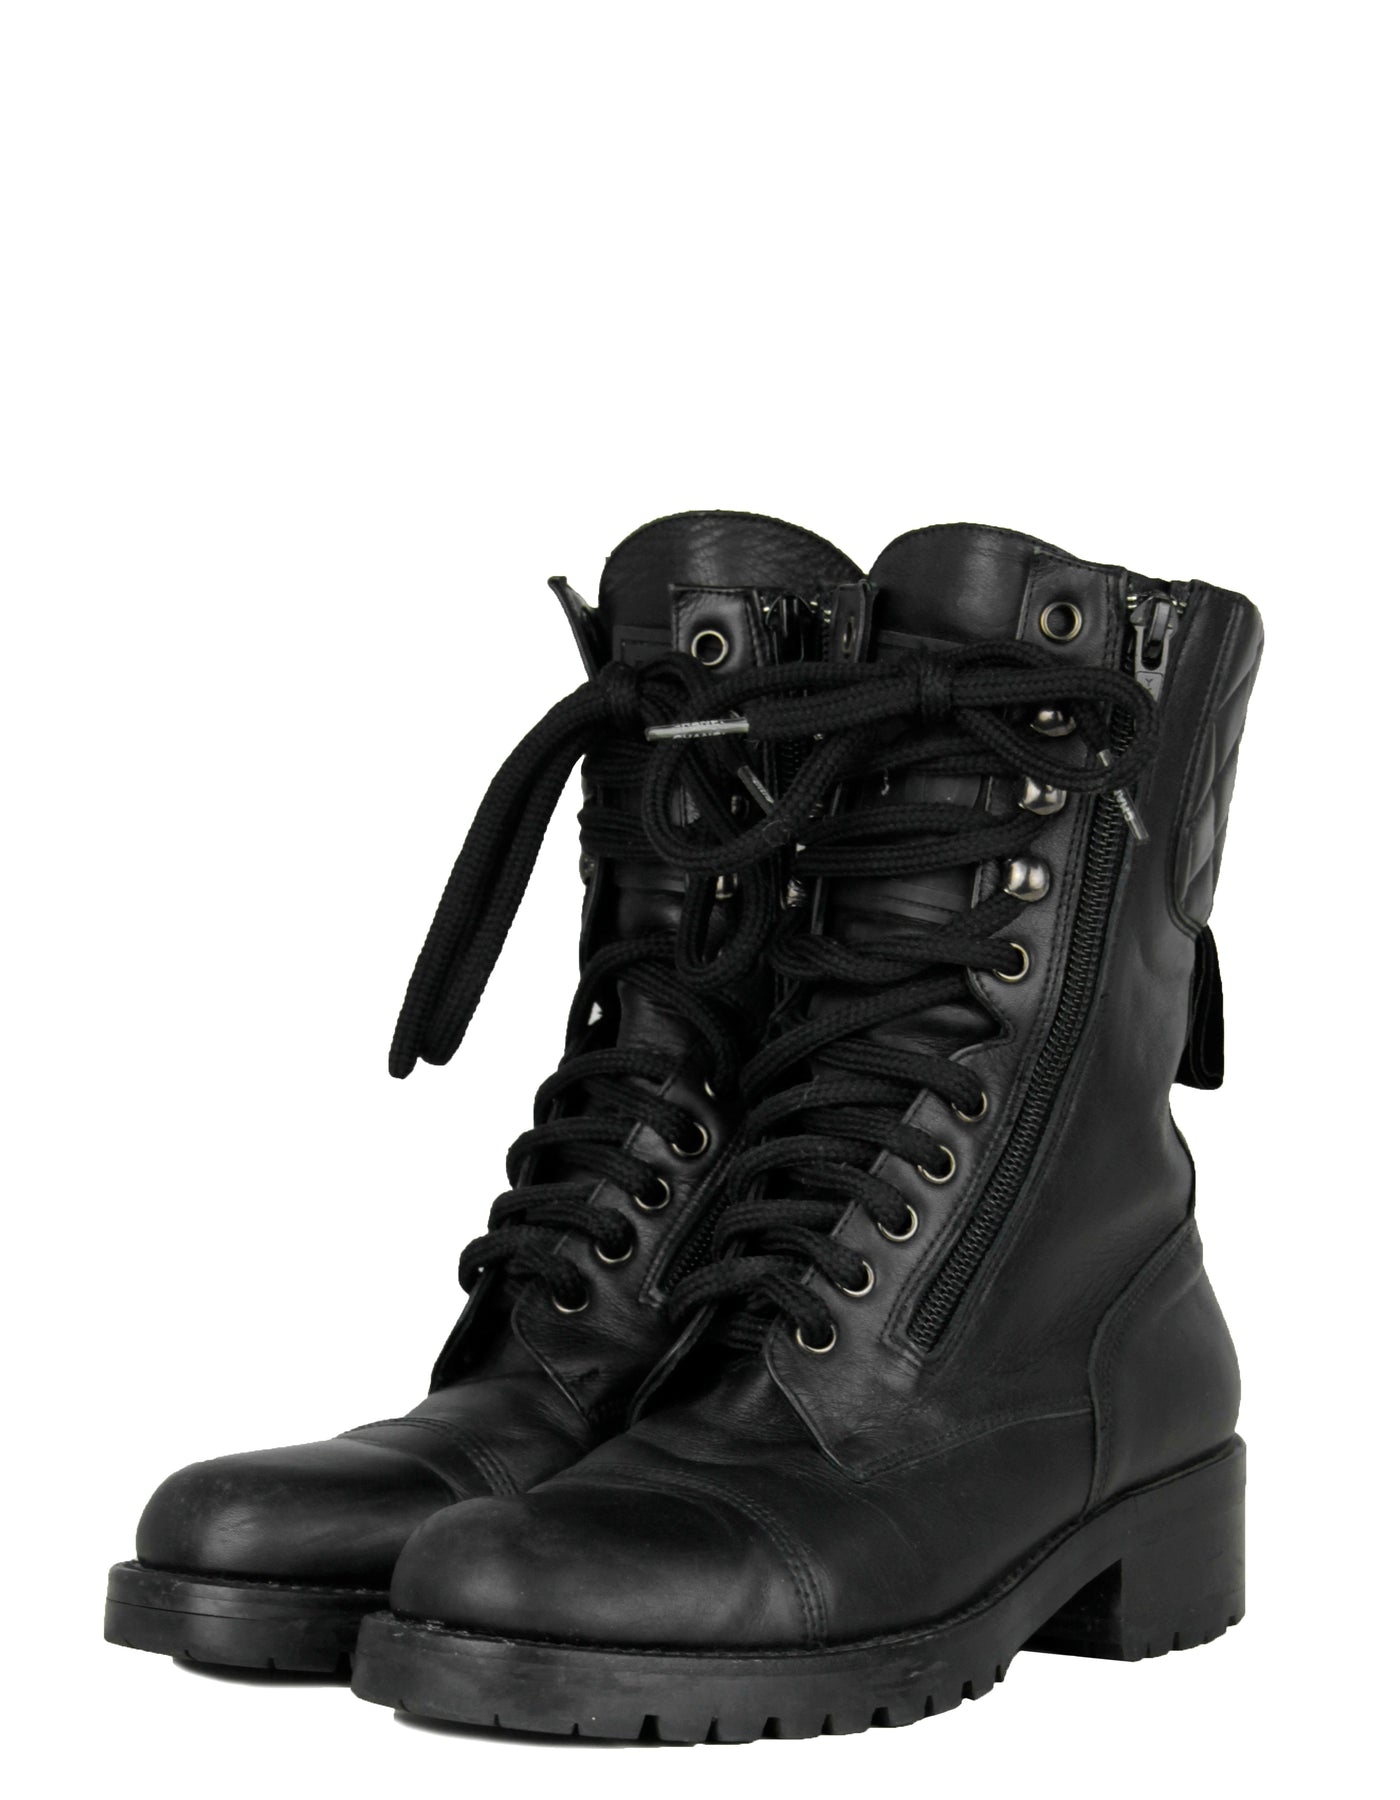 Chanel Silver/Black Aged Calfskin CC Lace Up Combat Boots Sz 36c